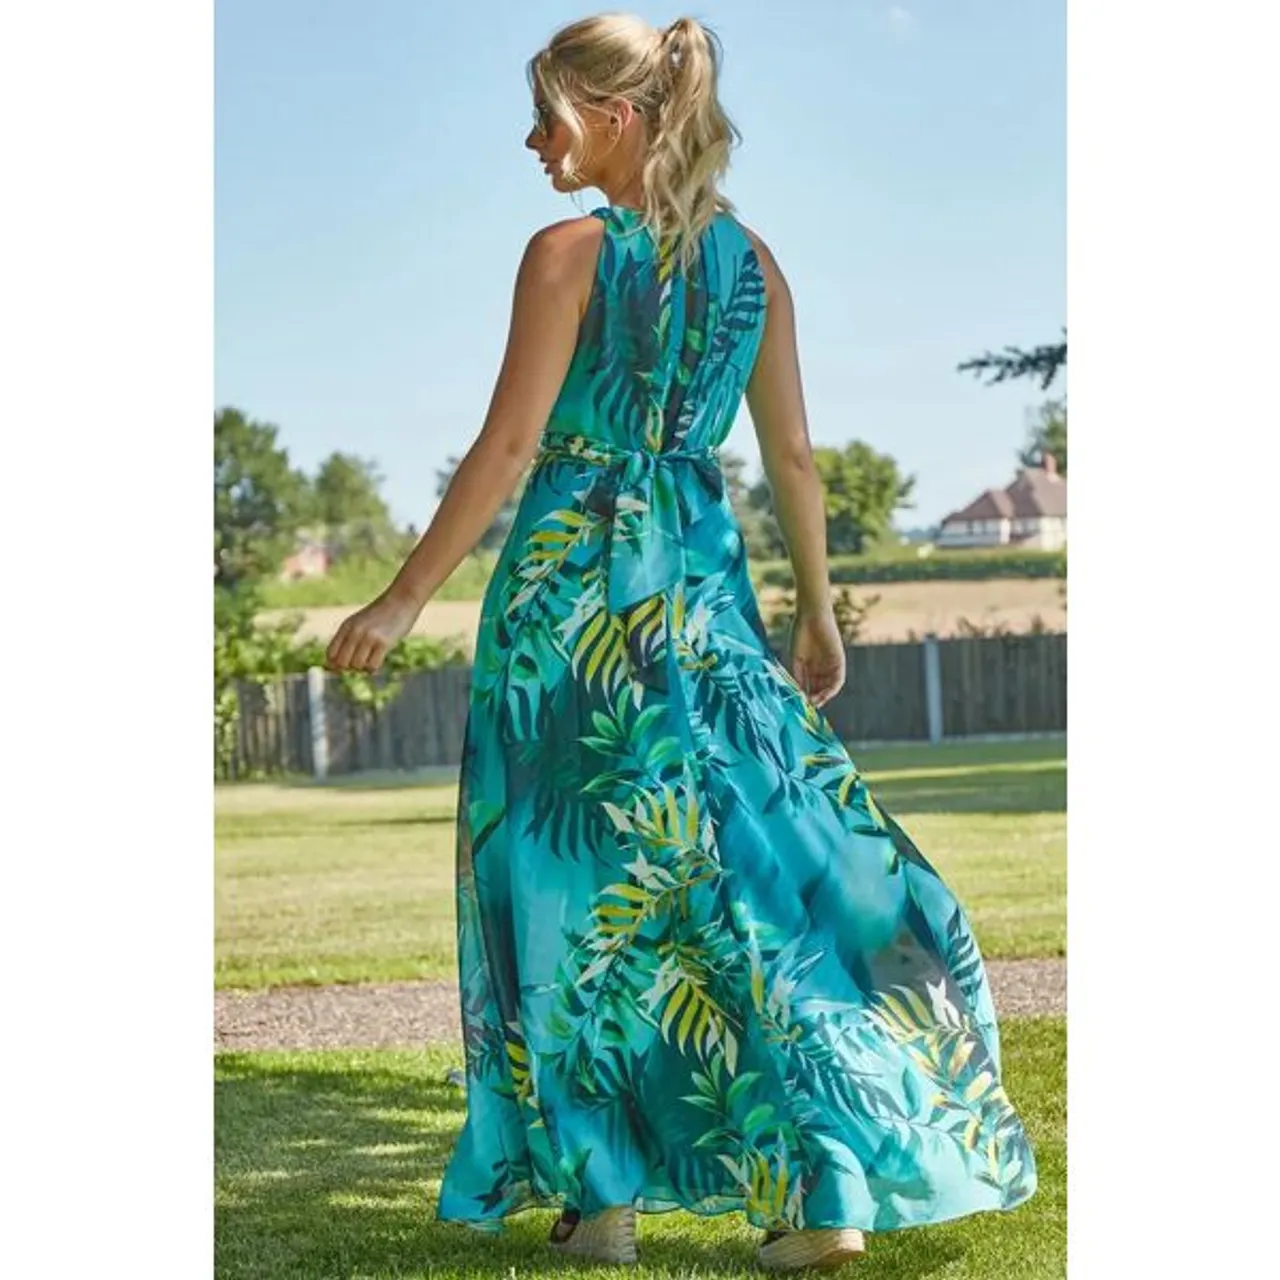 Roman Tropical Print Maxi Dress in Aqua - Size 12 12 female